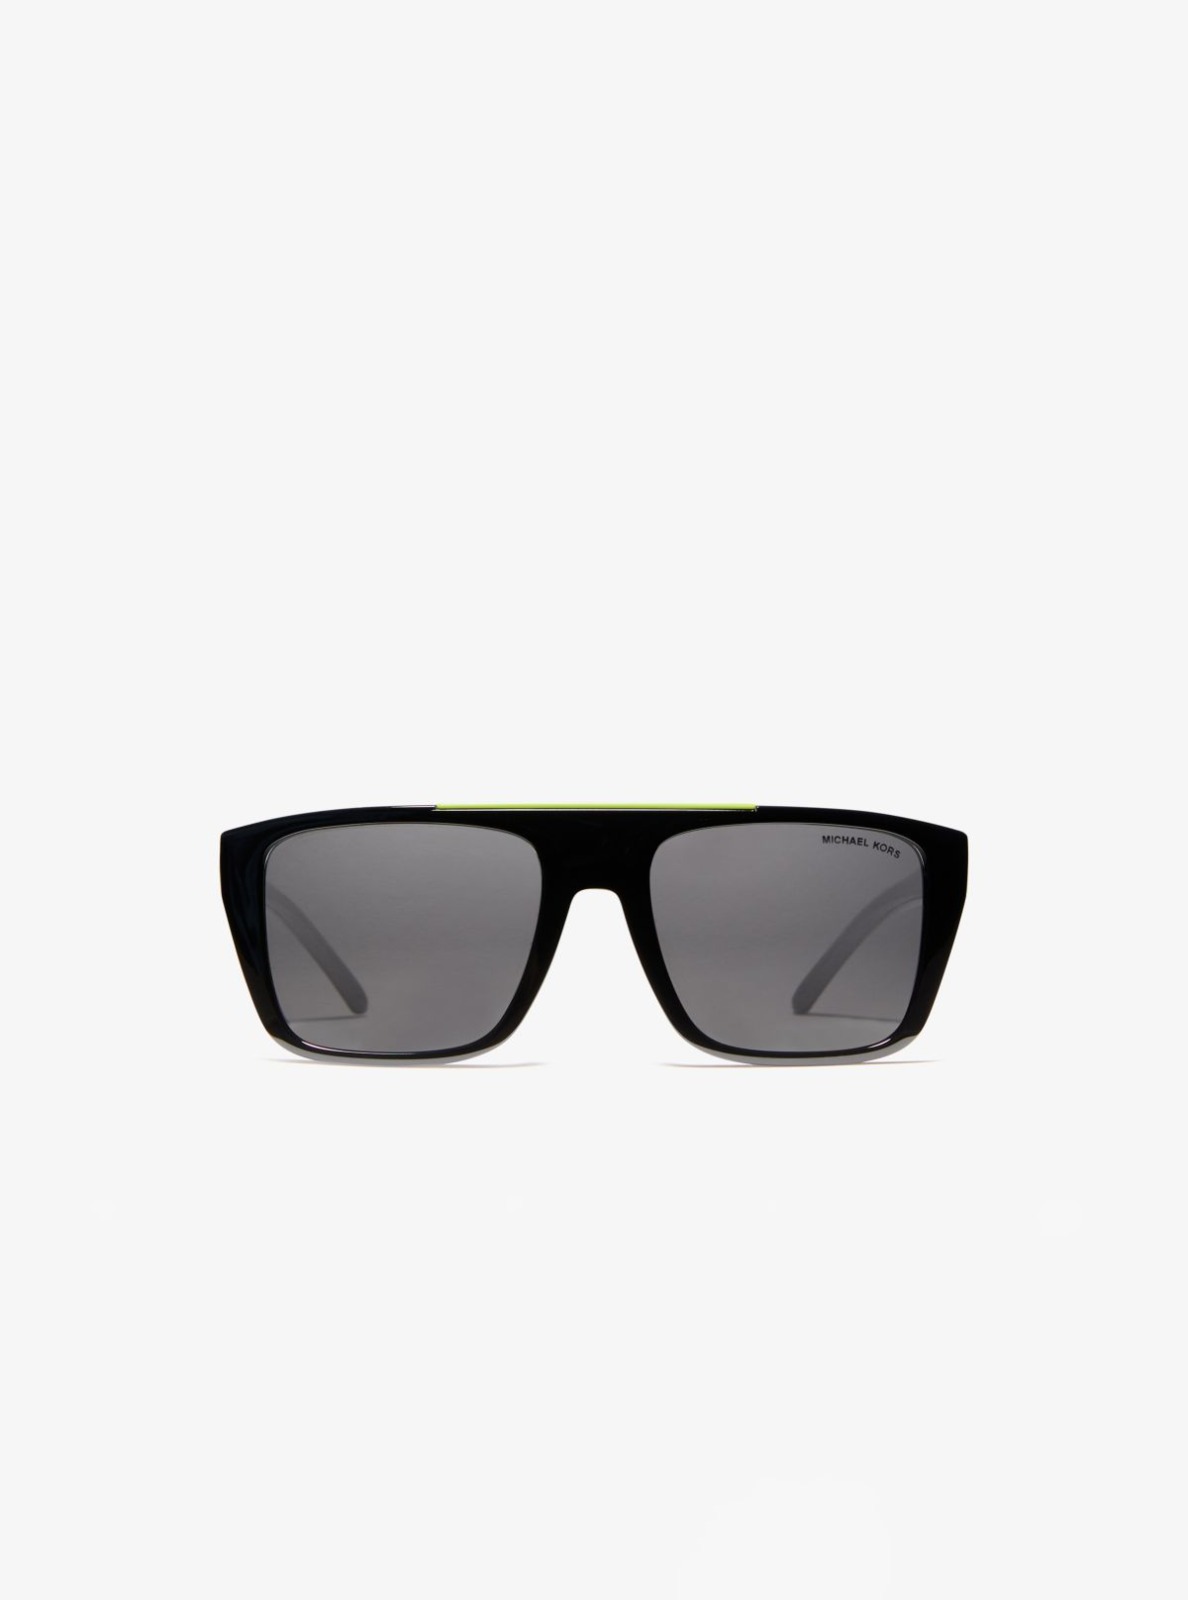 Michael Kors Gent Sunglasses in Black GOOFASH